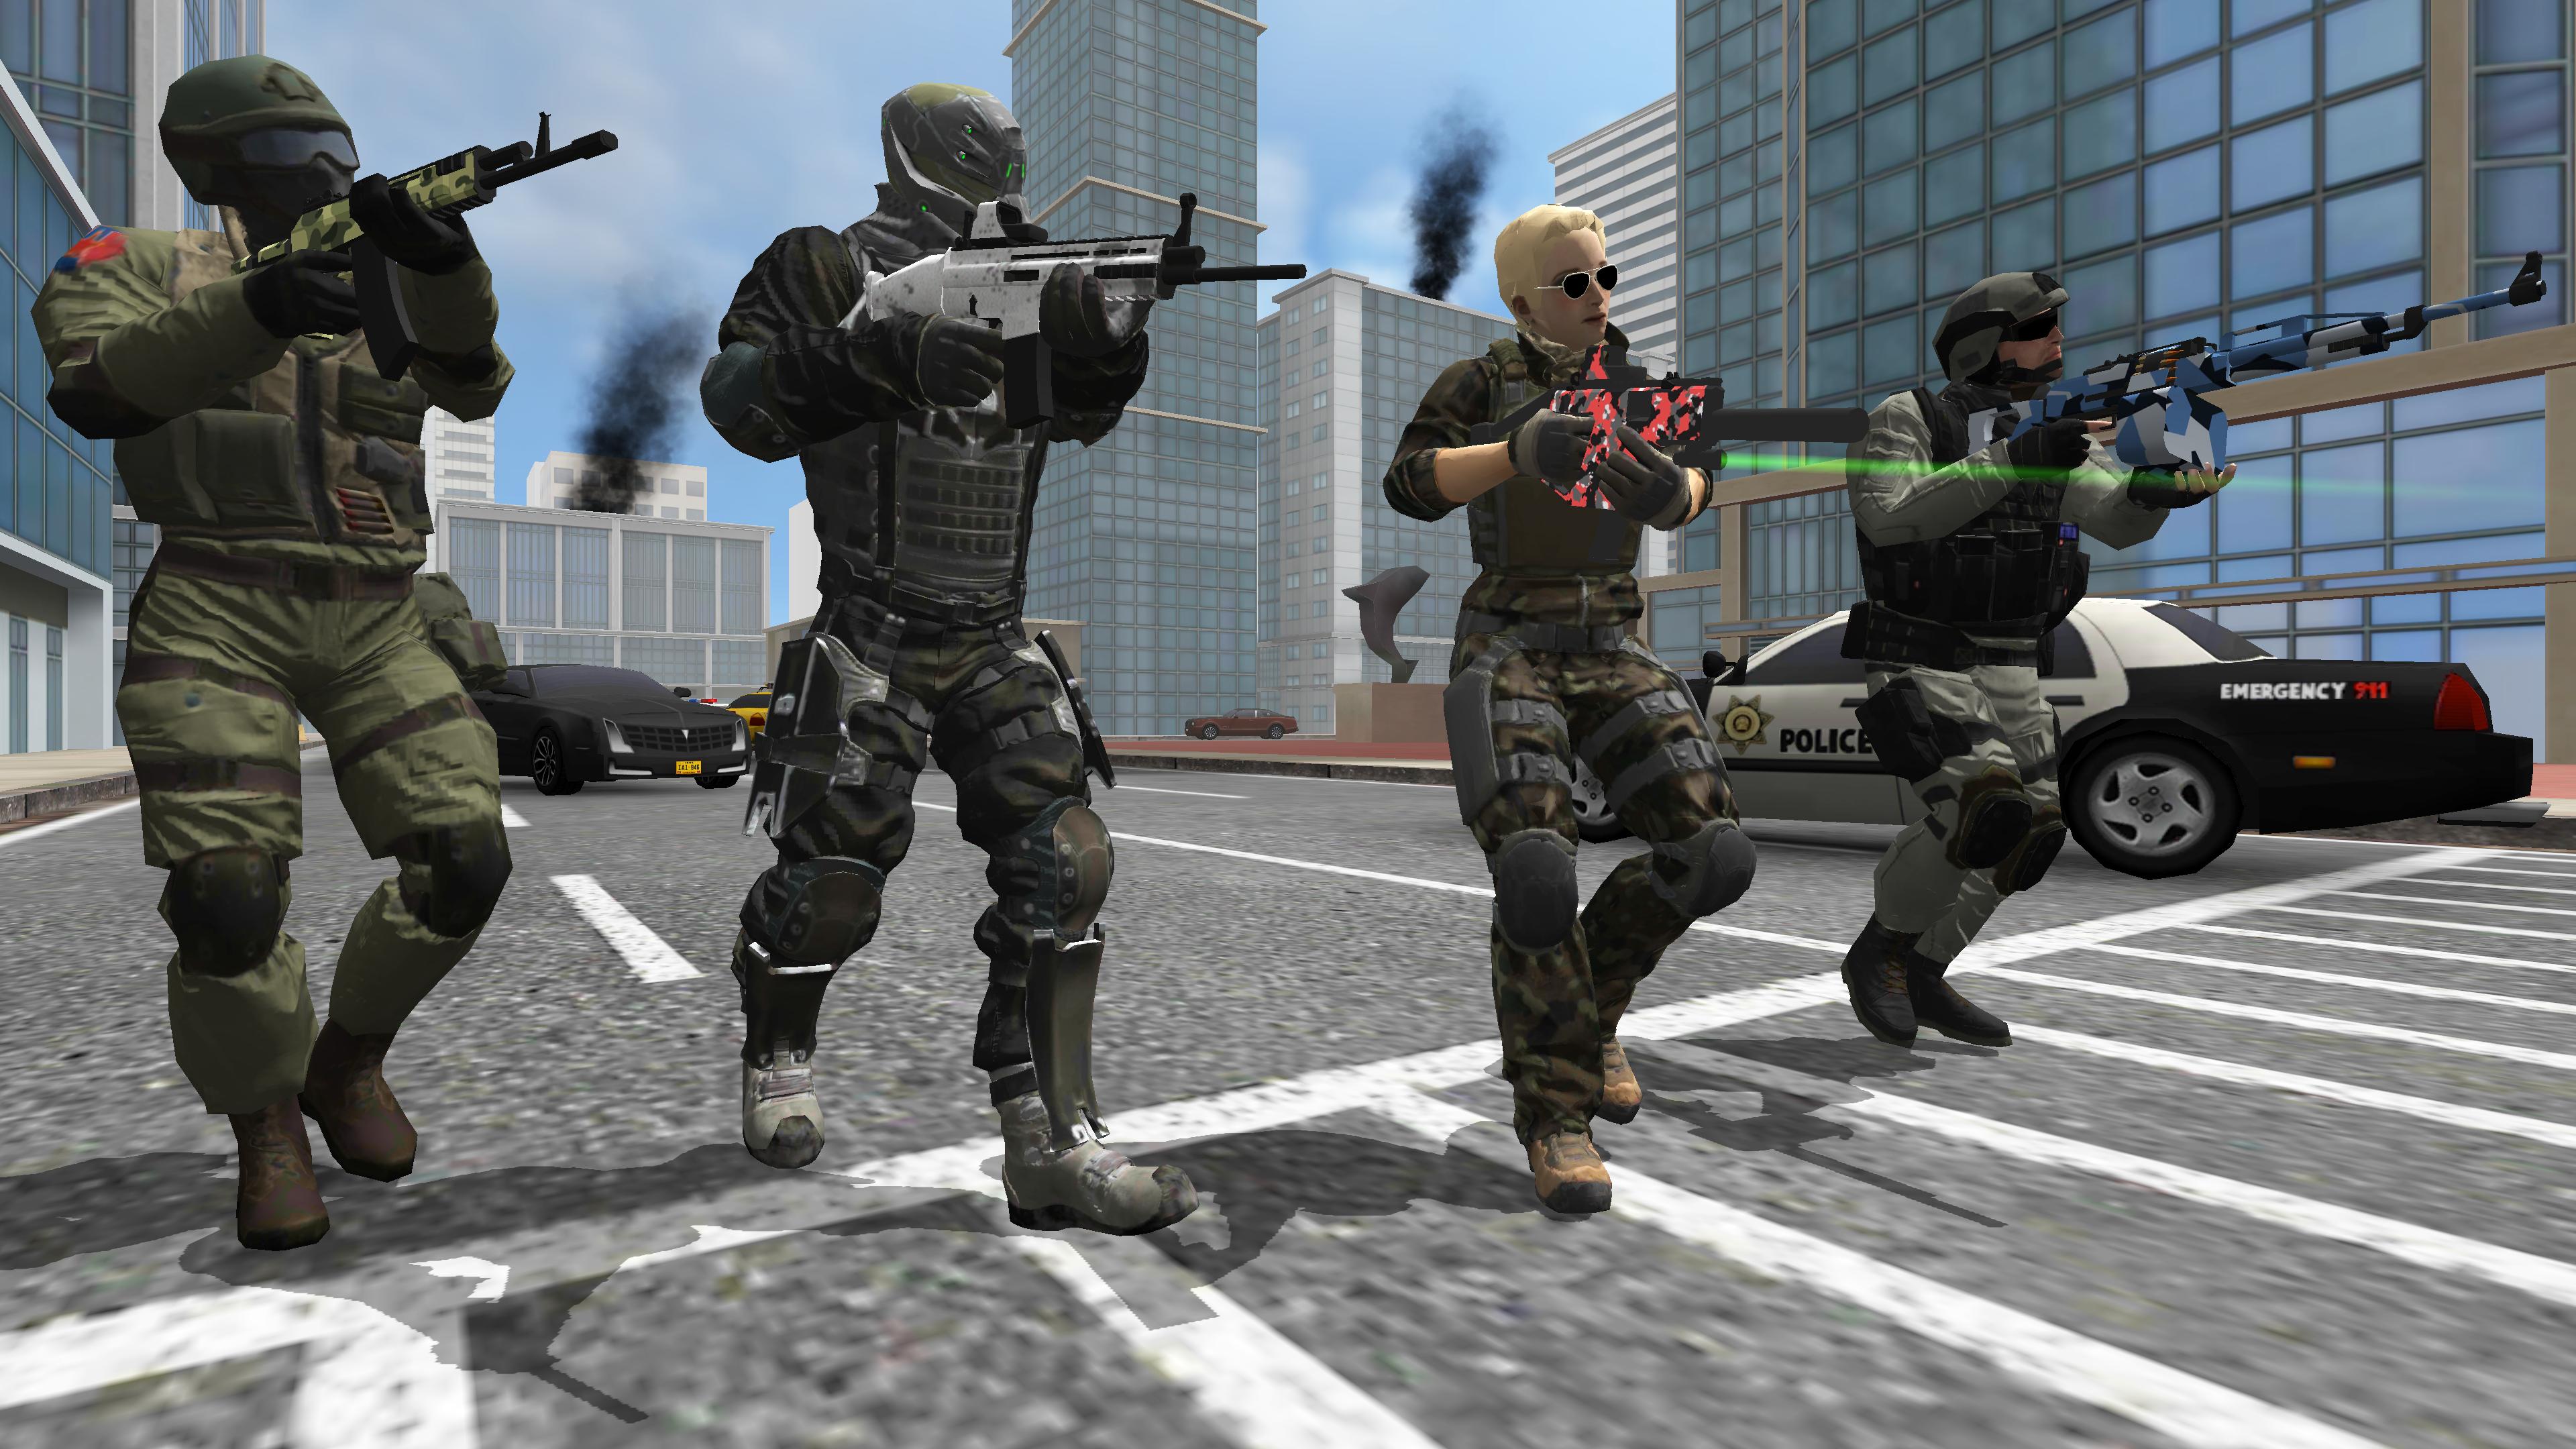 Earth Protect Squad Third Person Shooting Game 2.00.32b Screenshot 3